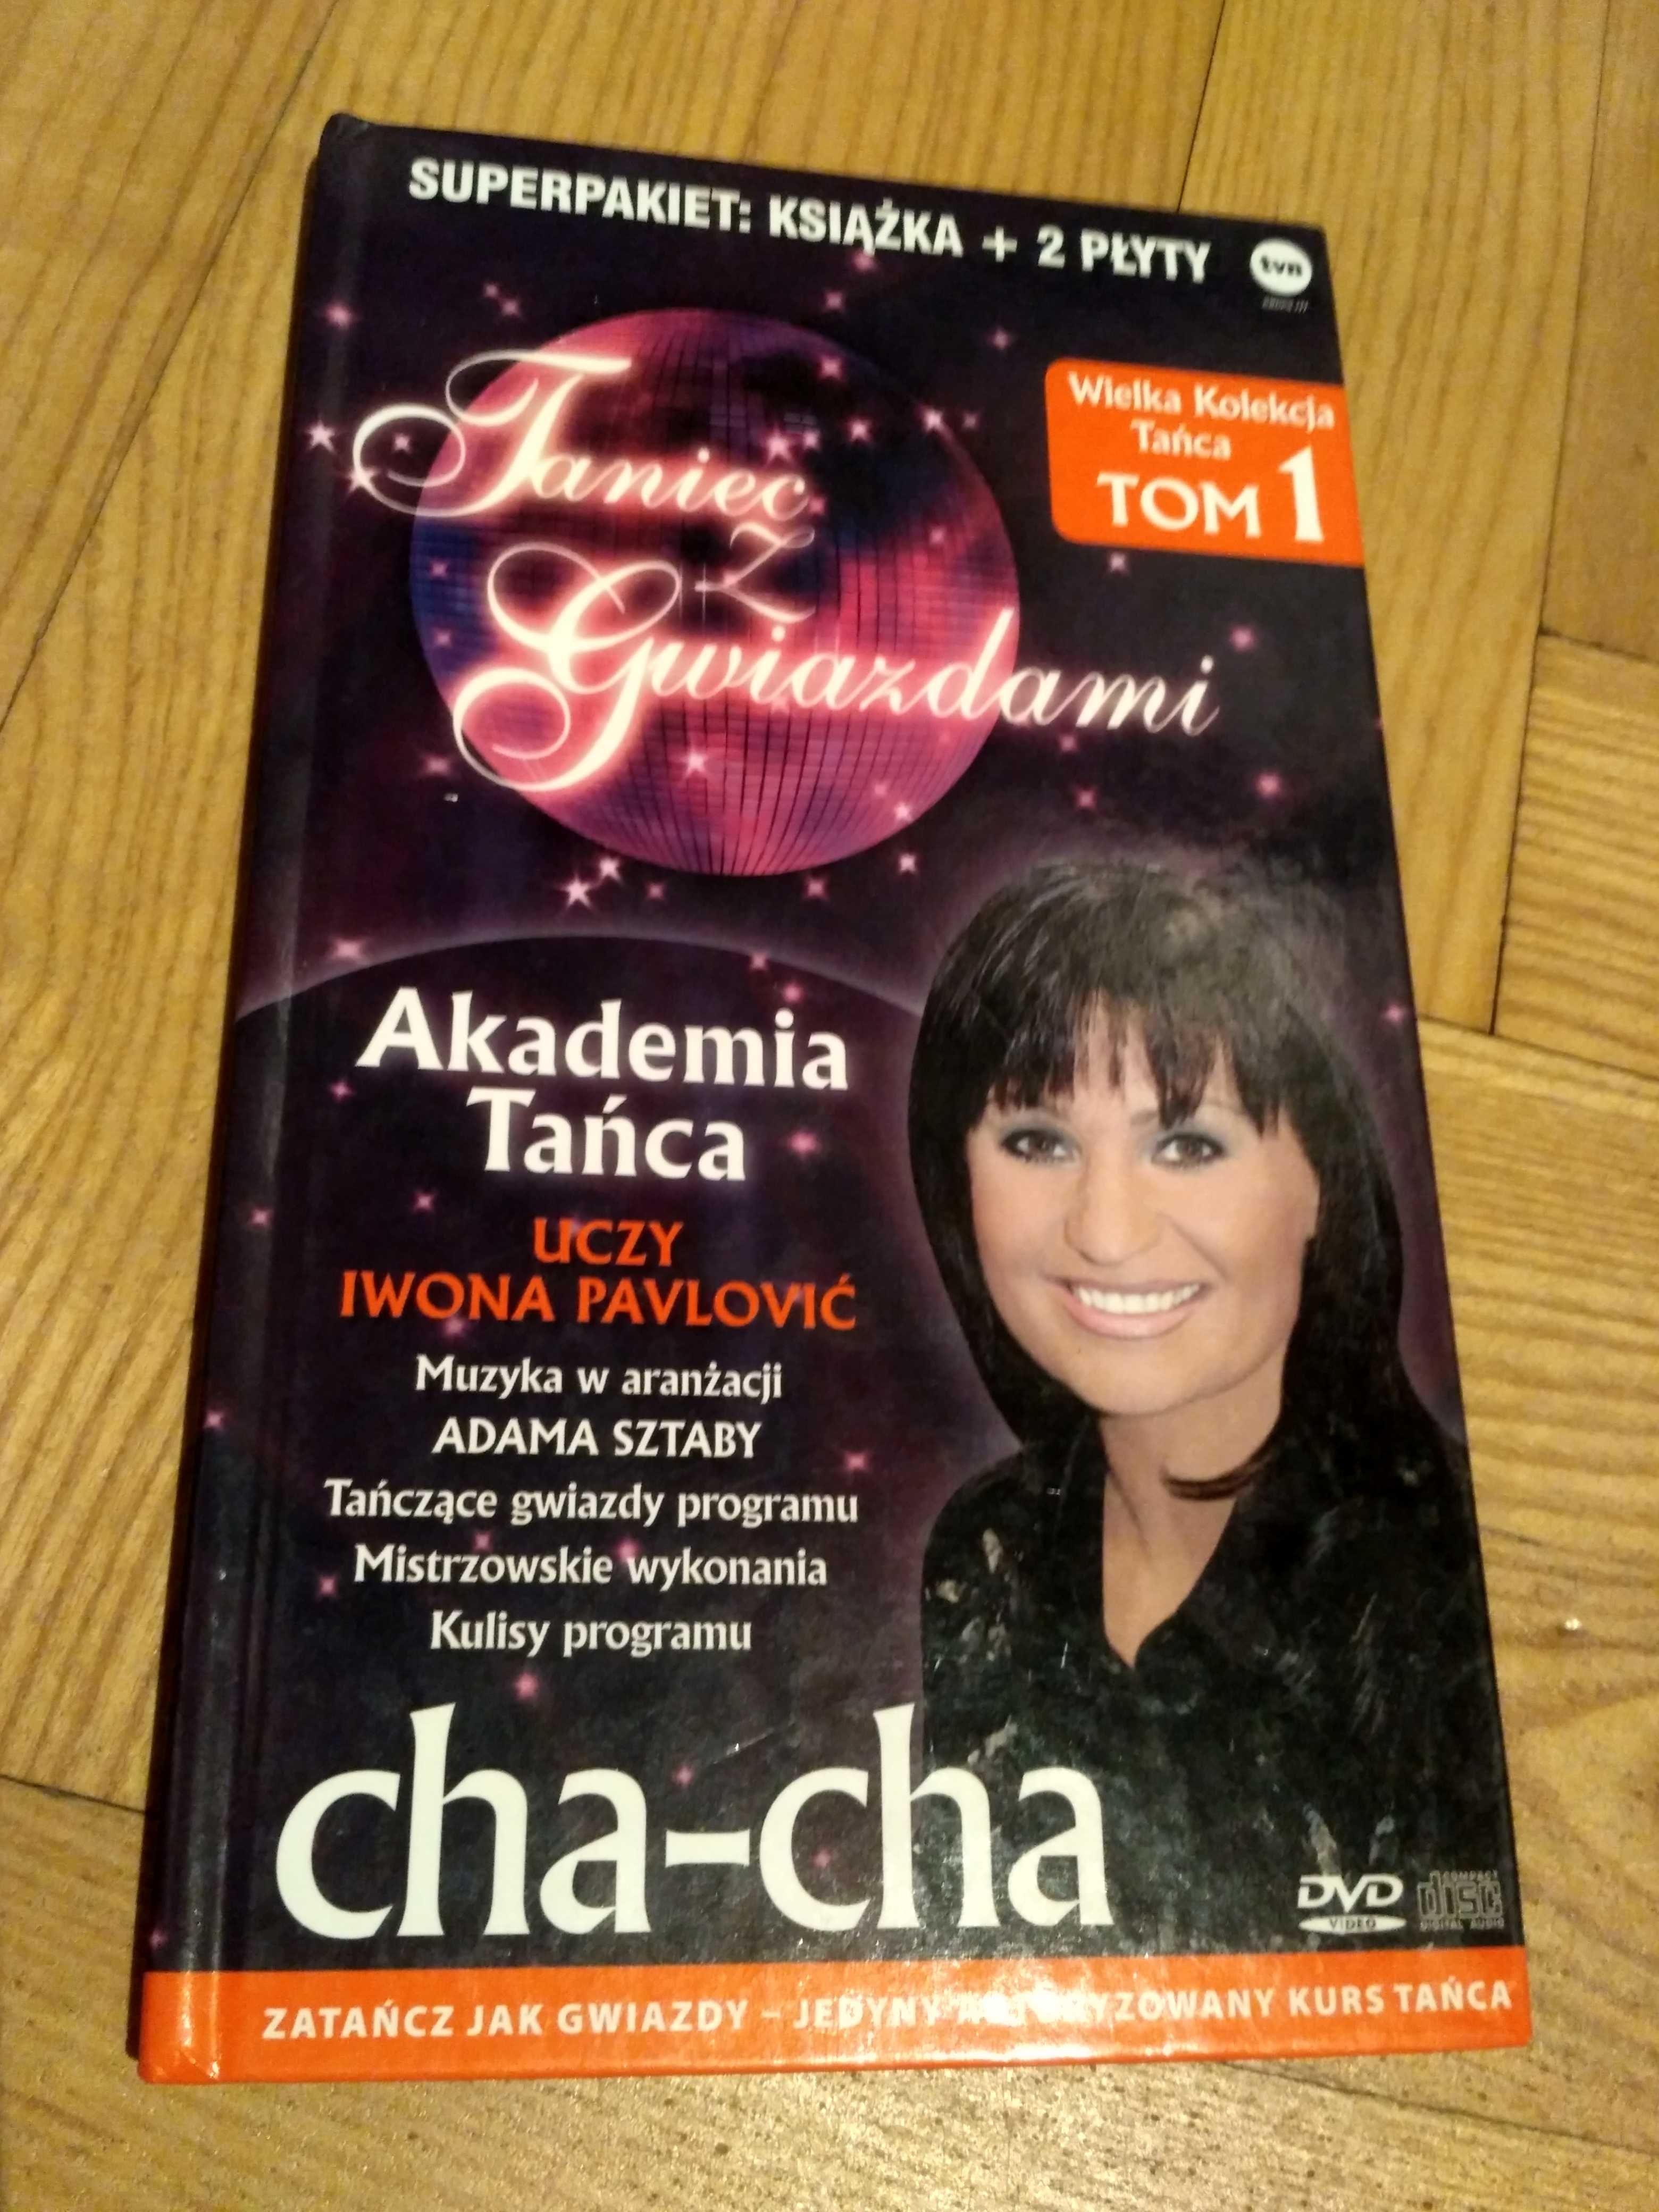 Akademia tańca, Ivona Pavlović, książka i 2 X CD, kurs tańca: Cha-cha